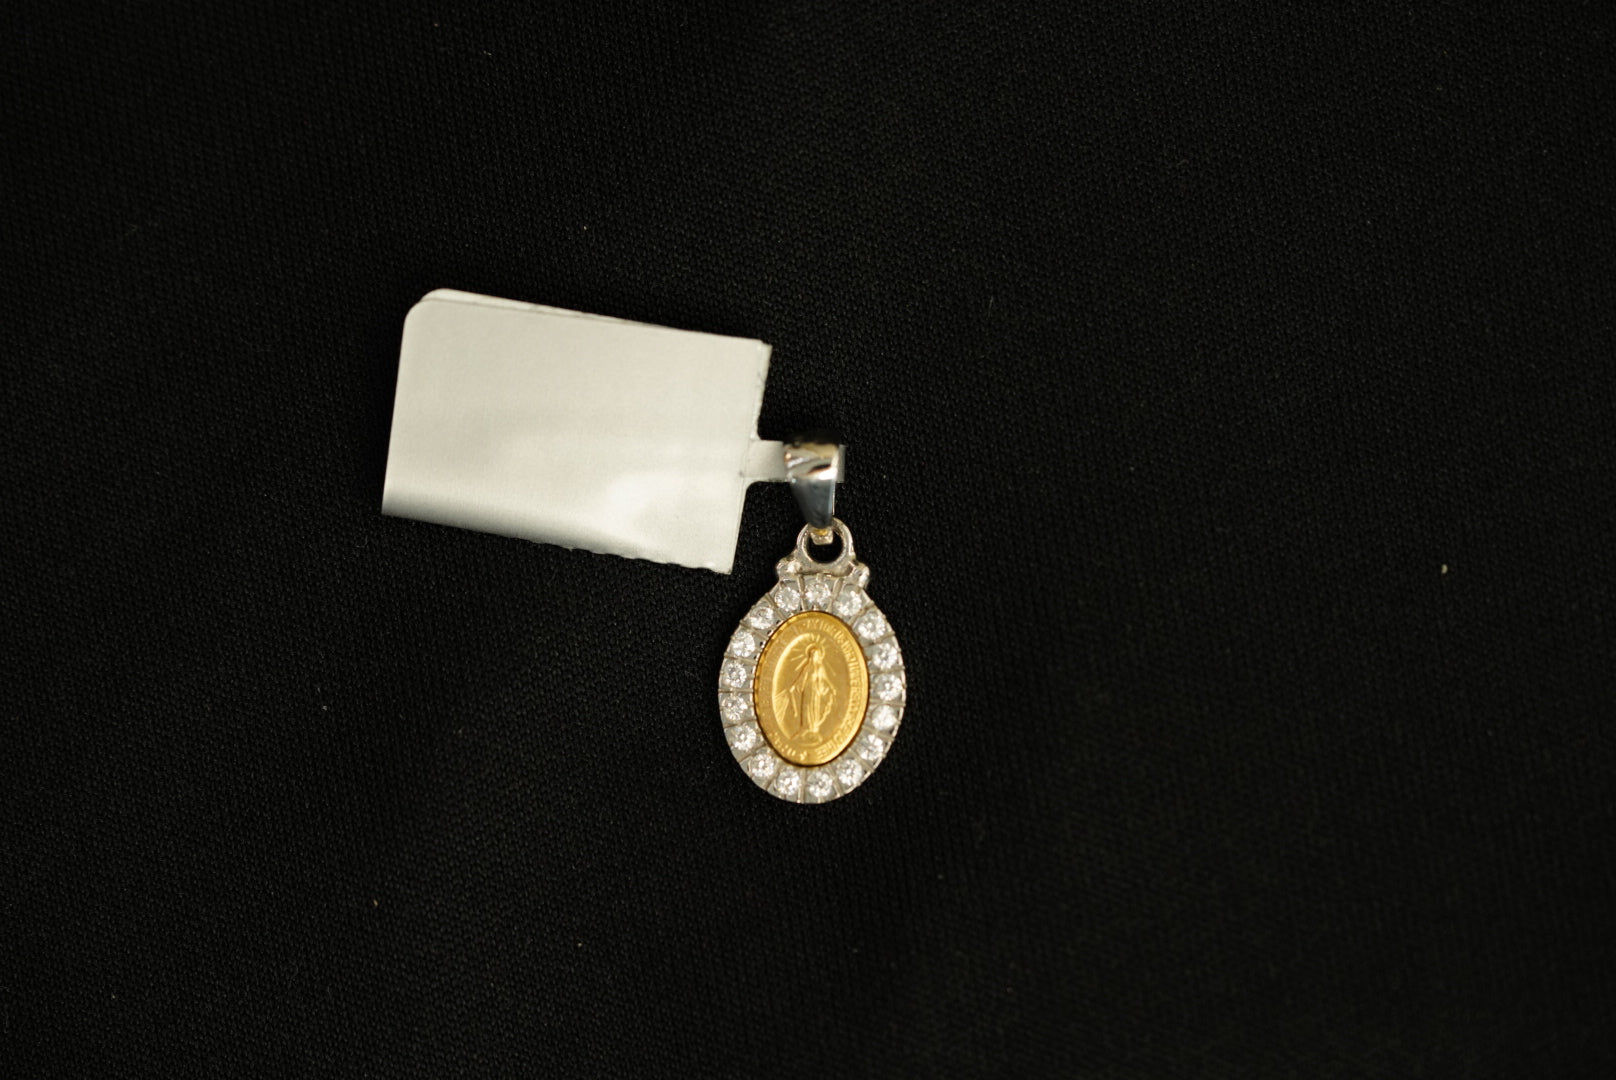 18k White Gold Chain with Coromoto Virgin Pendant